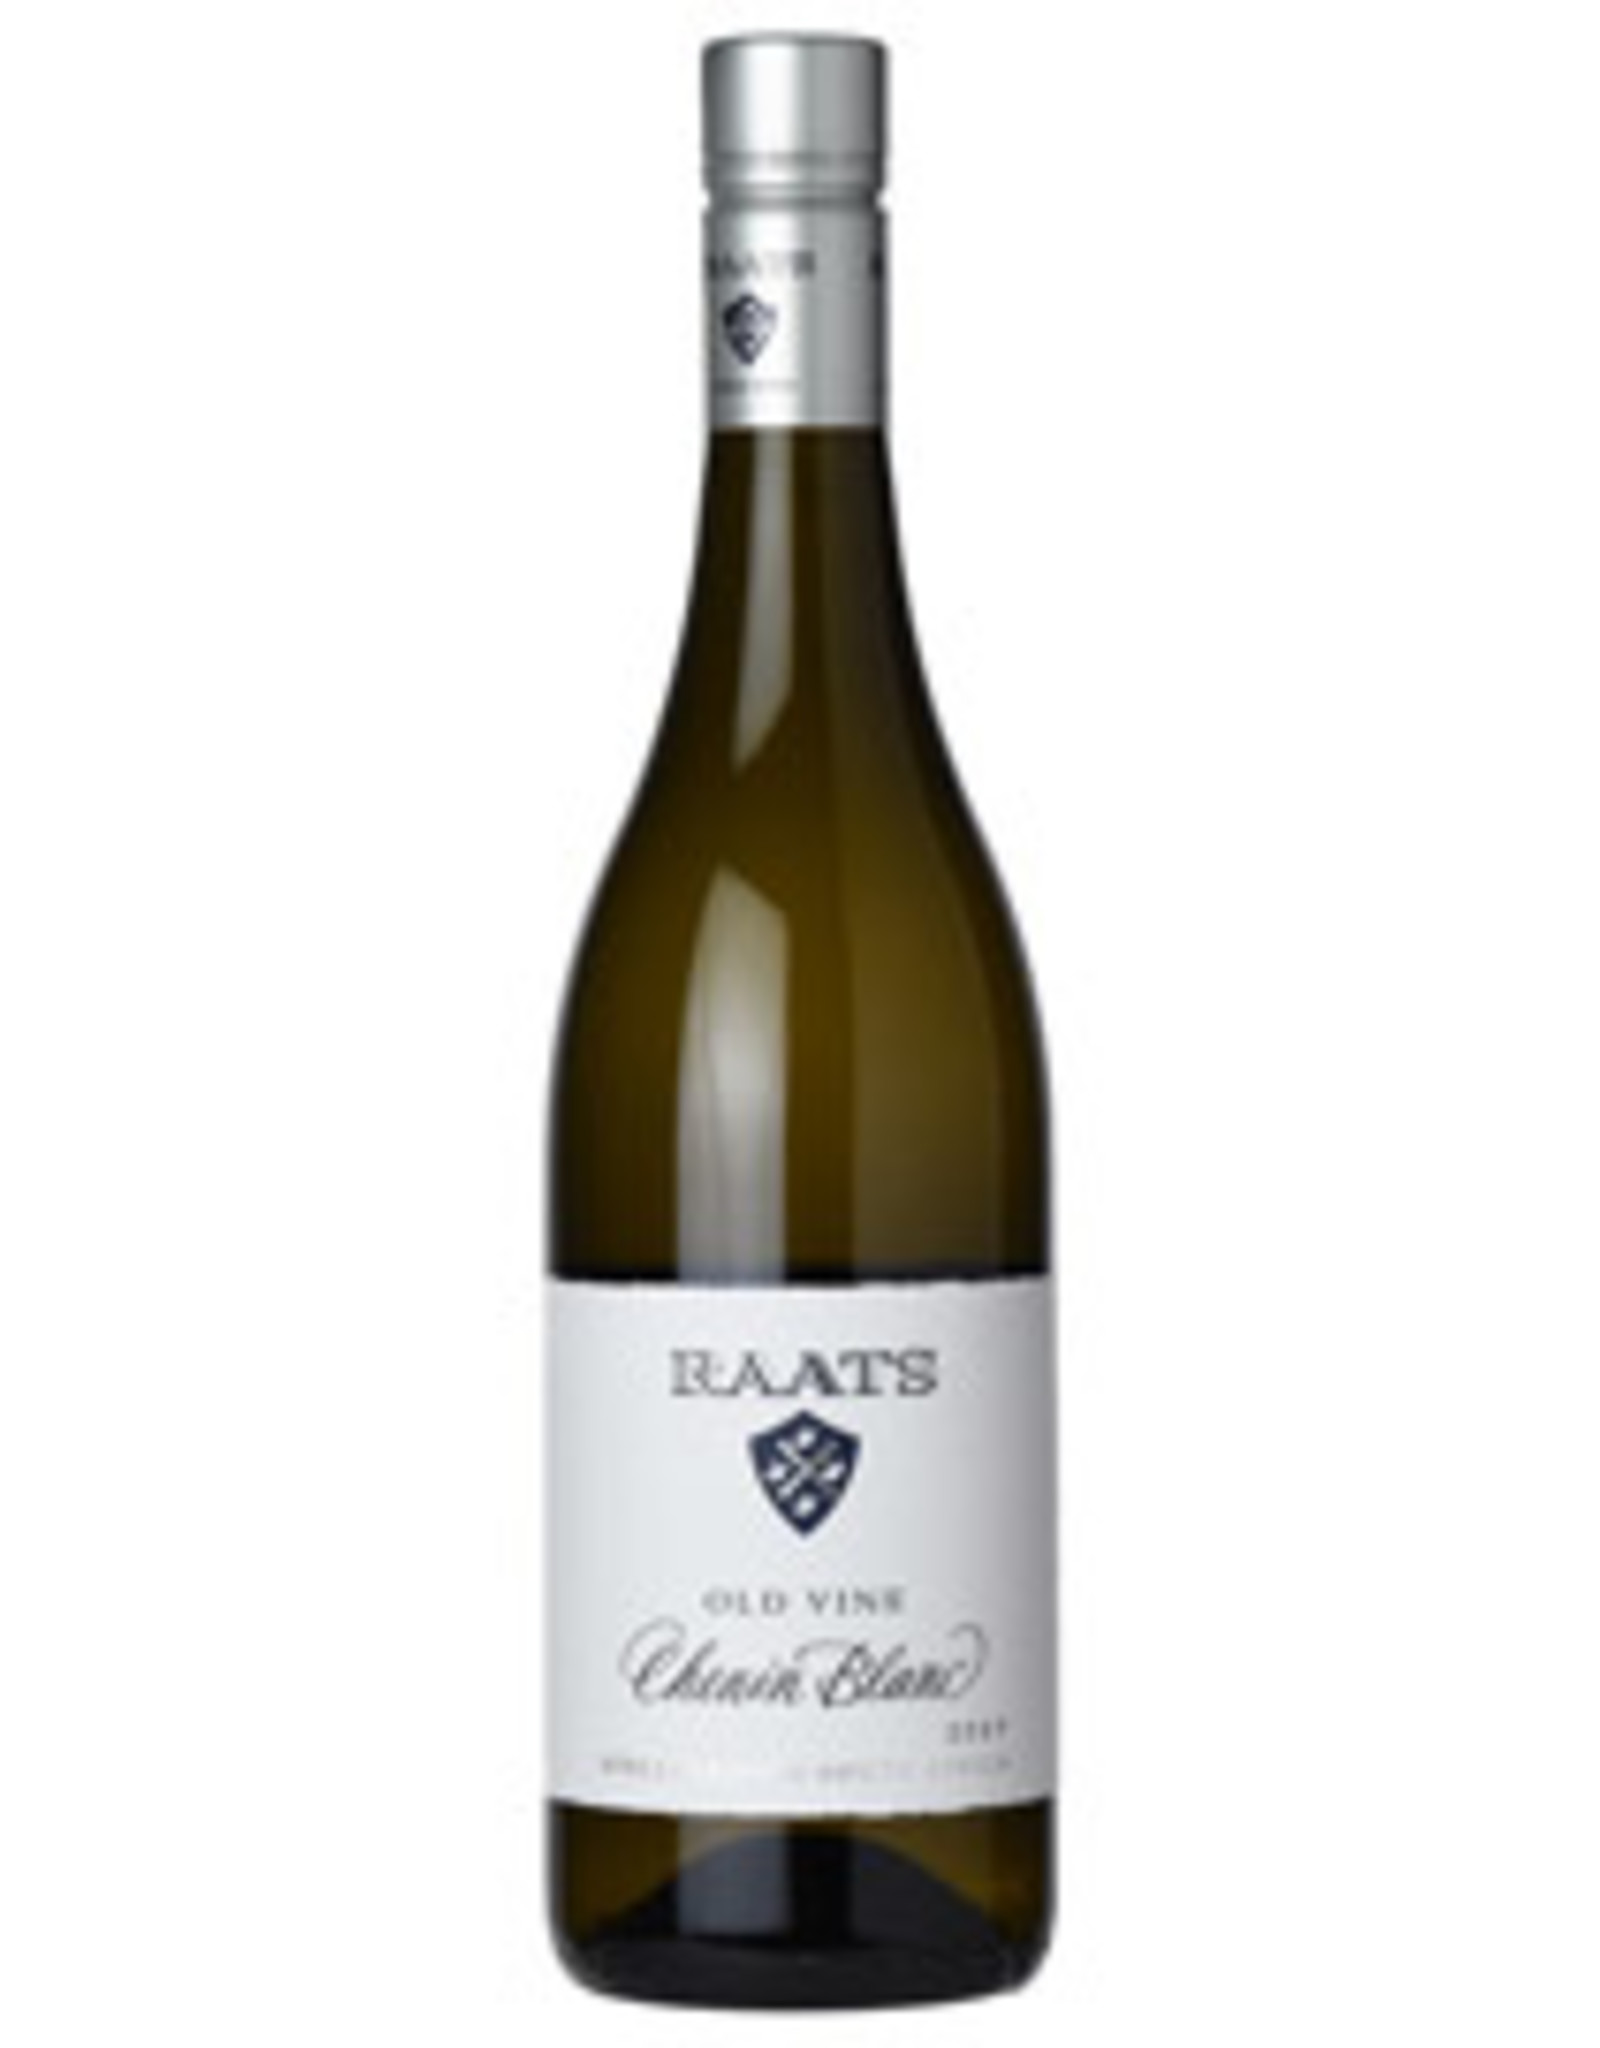 Raats Stellenbosch Old Vine Chenin Blanc